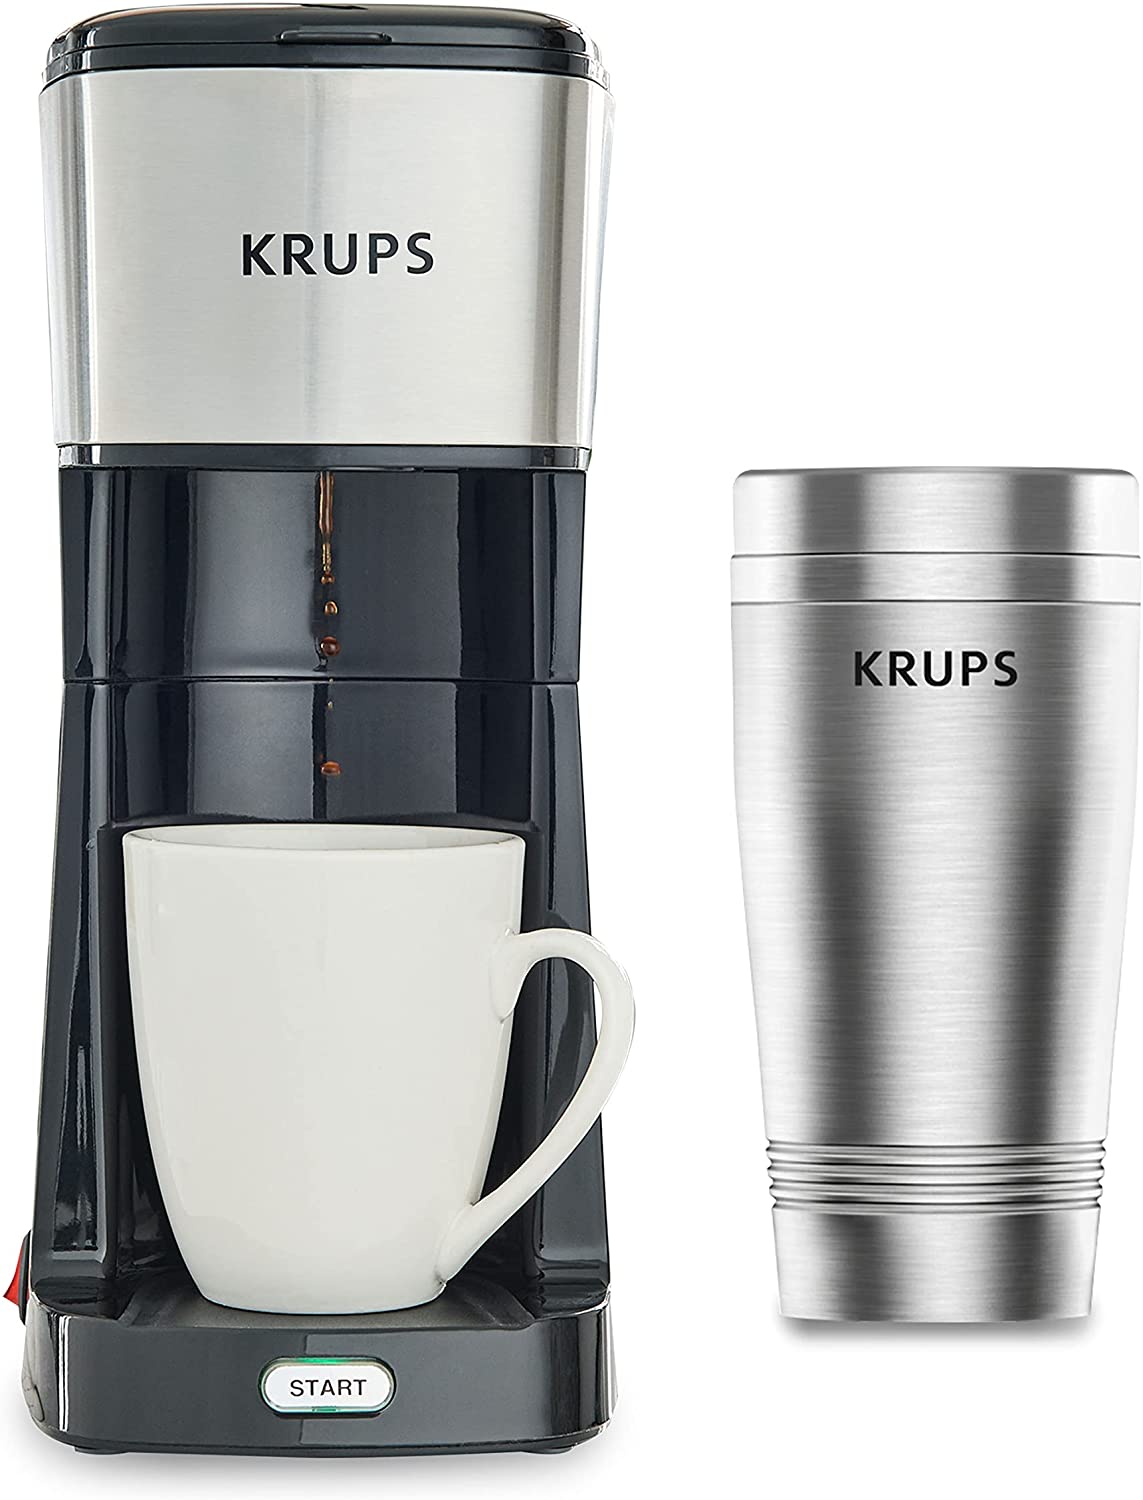 KRUPS Simply Brew To Go Single-Serve Coffee Maker